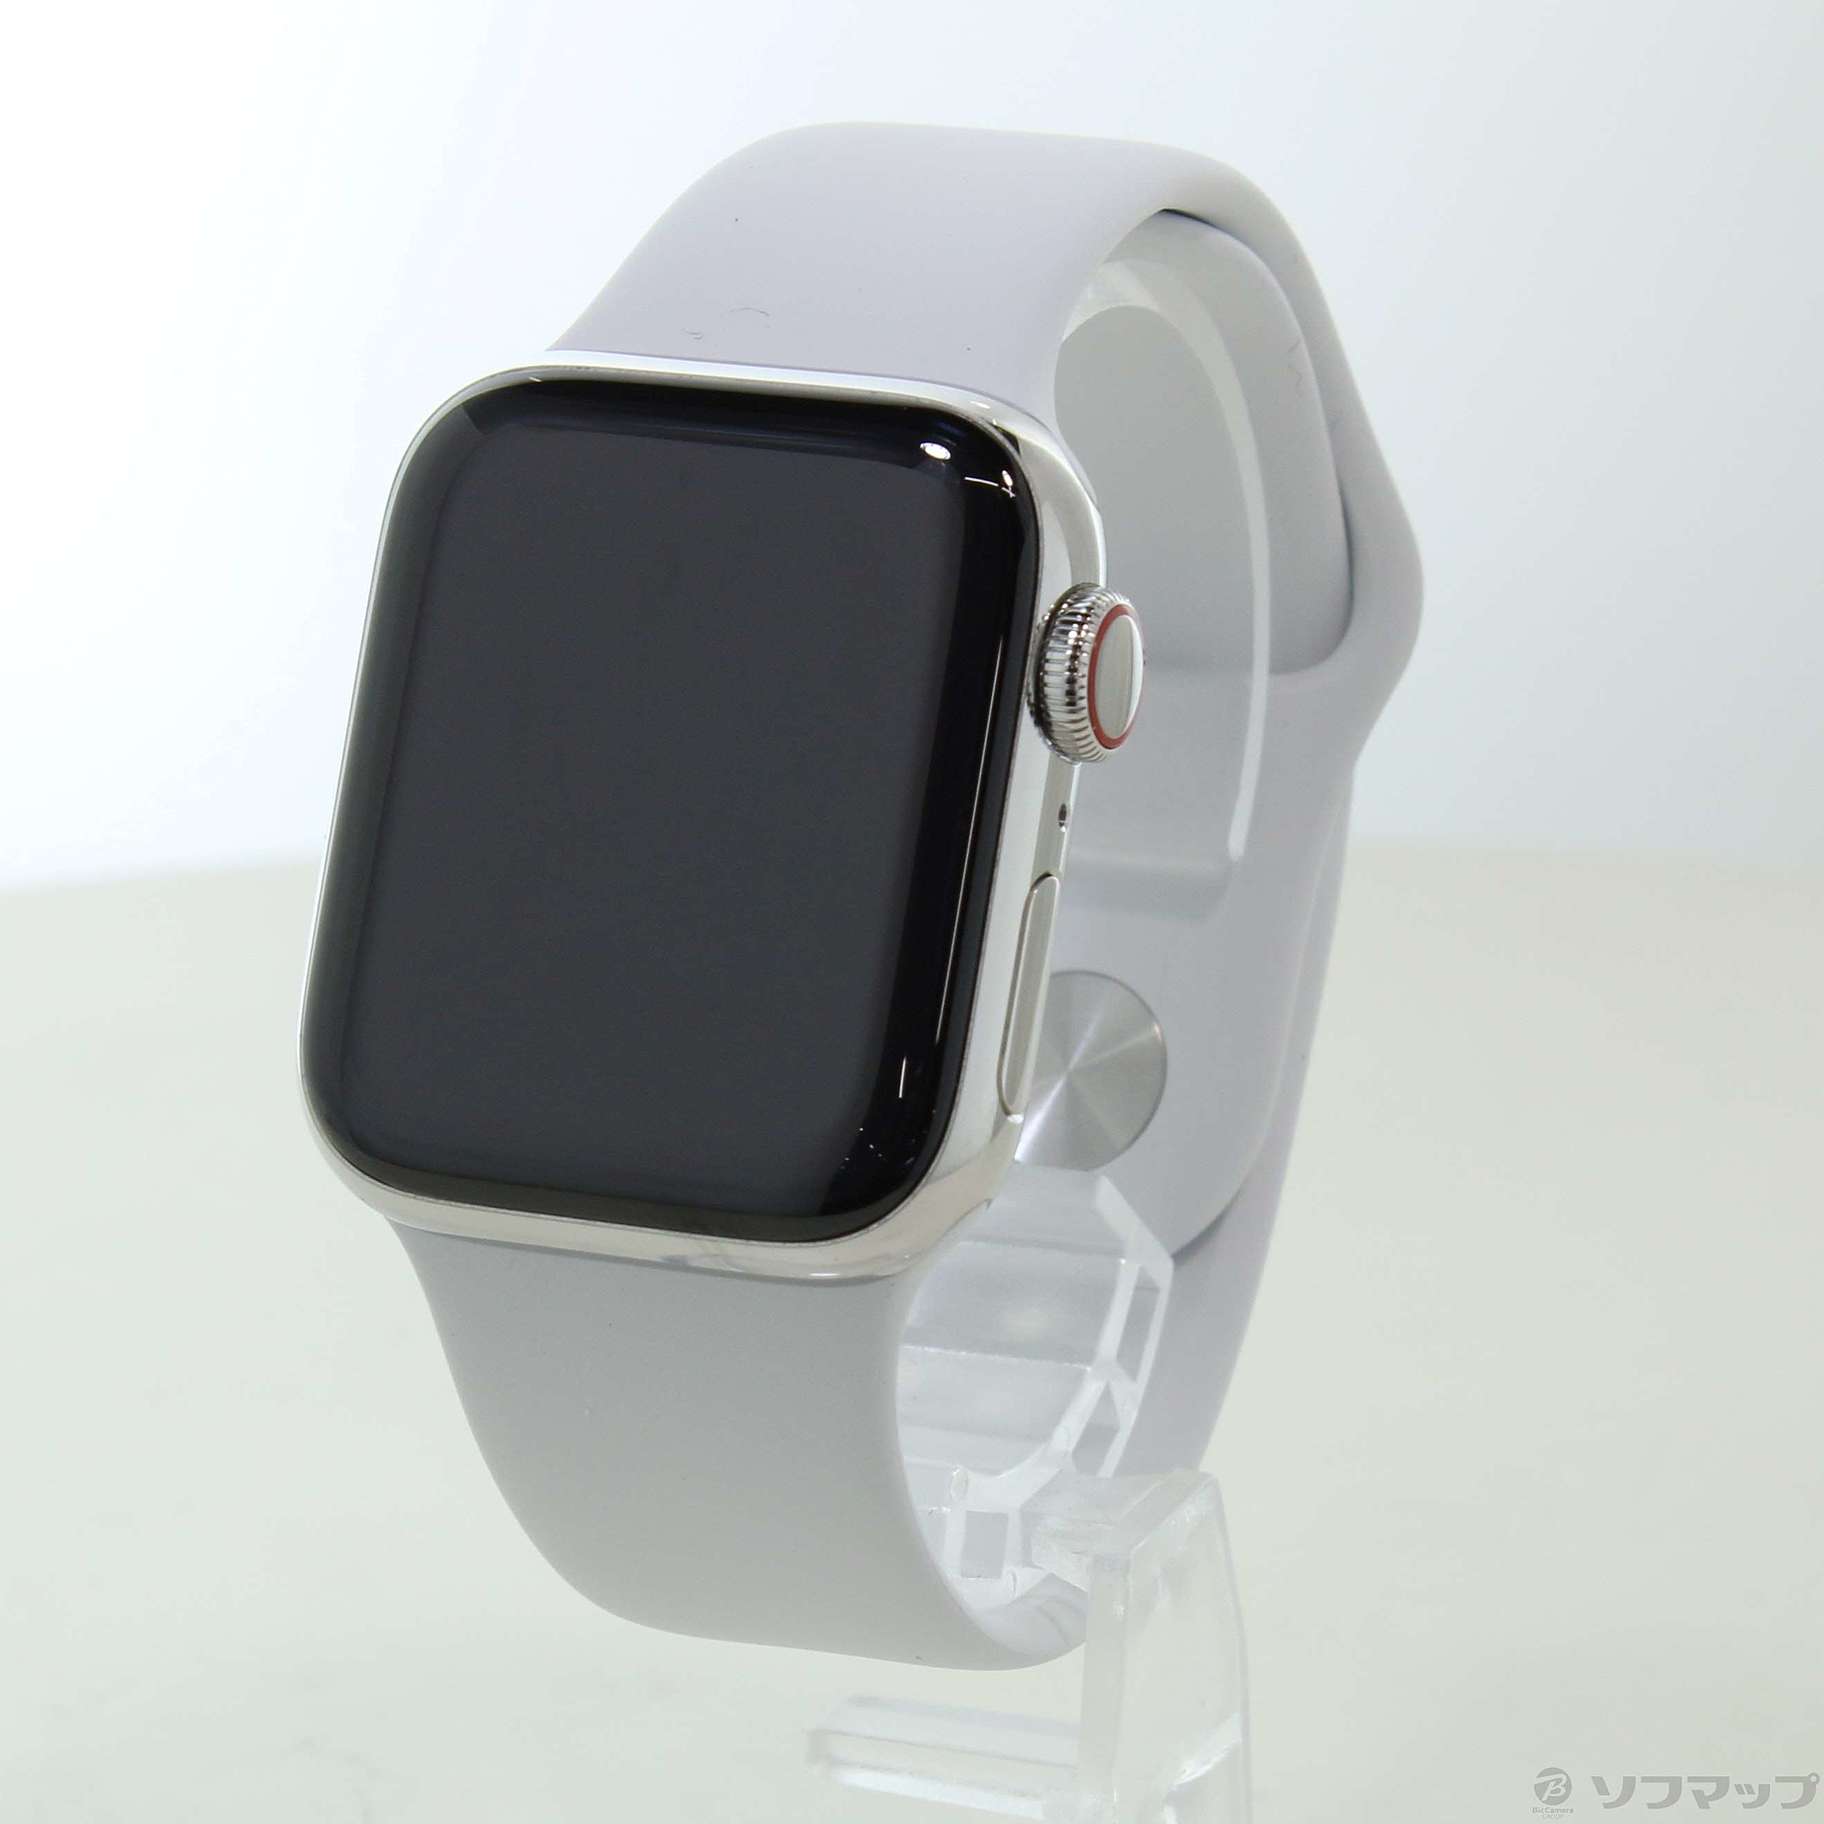 中古】〔展示品〕 Apple Watch Series 4 GPS + Cellular 40mm